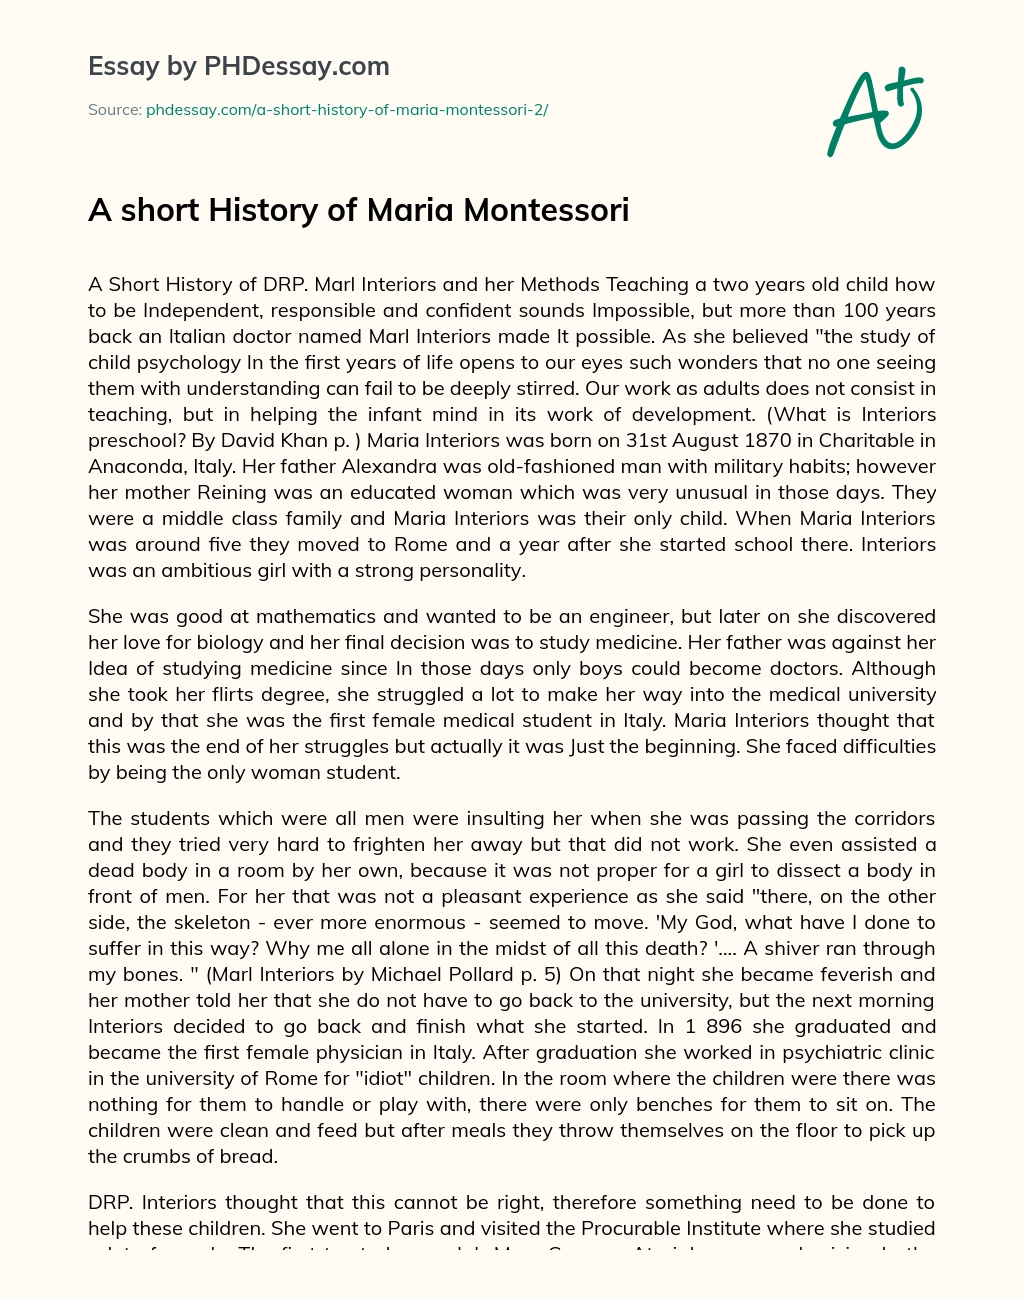 A short History of Maria Montessori essay